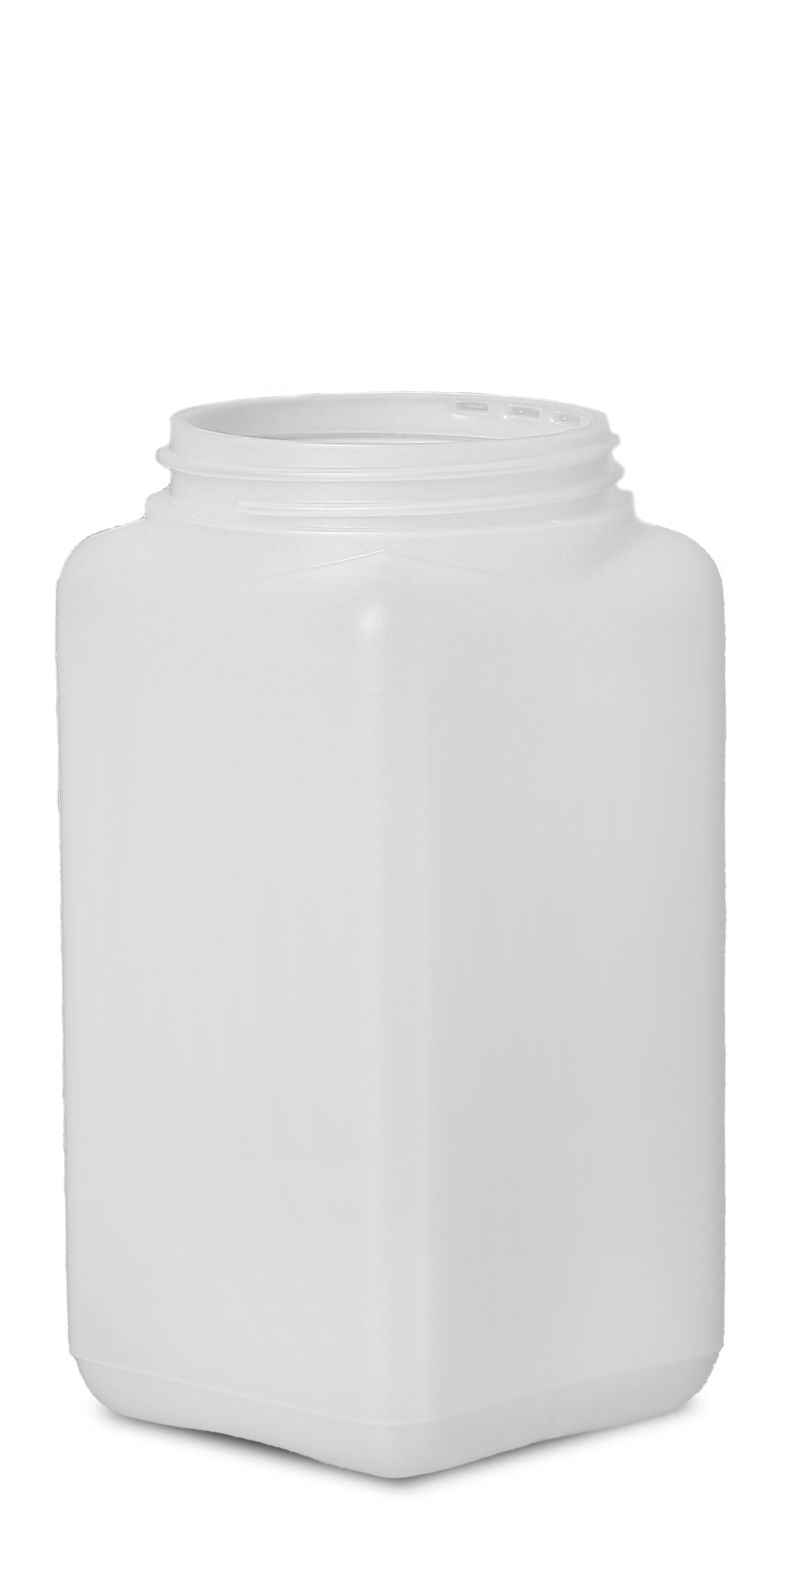 1000 ml HDPE Weithalsflasche